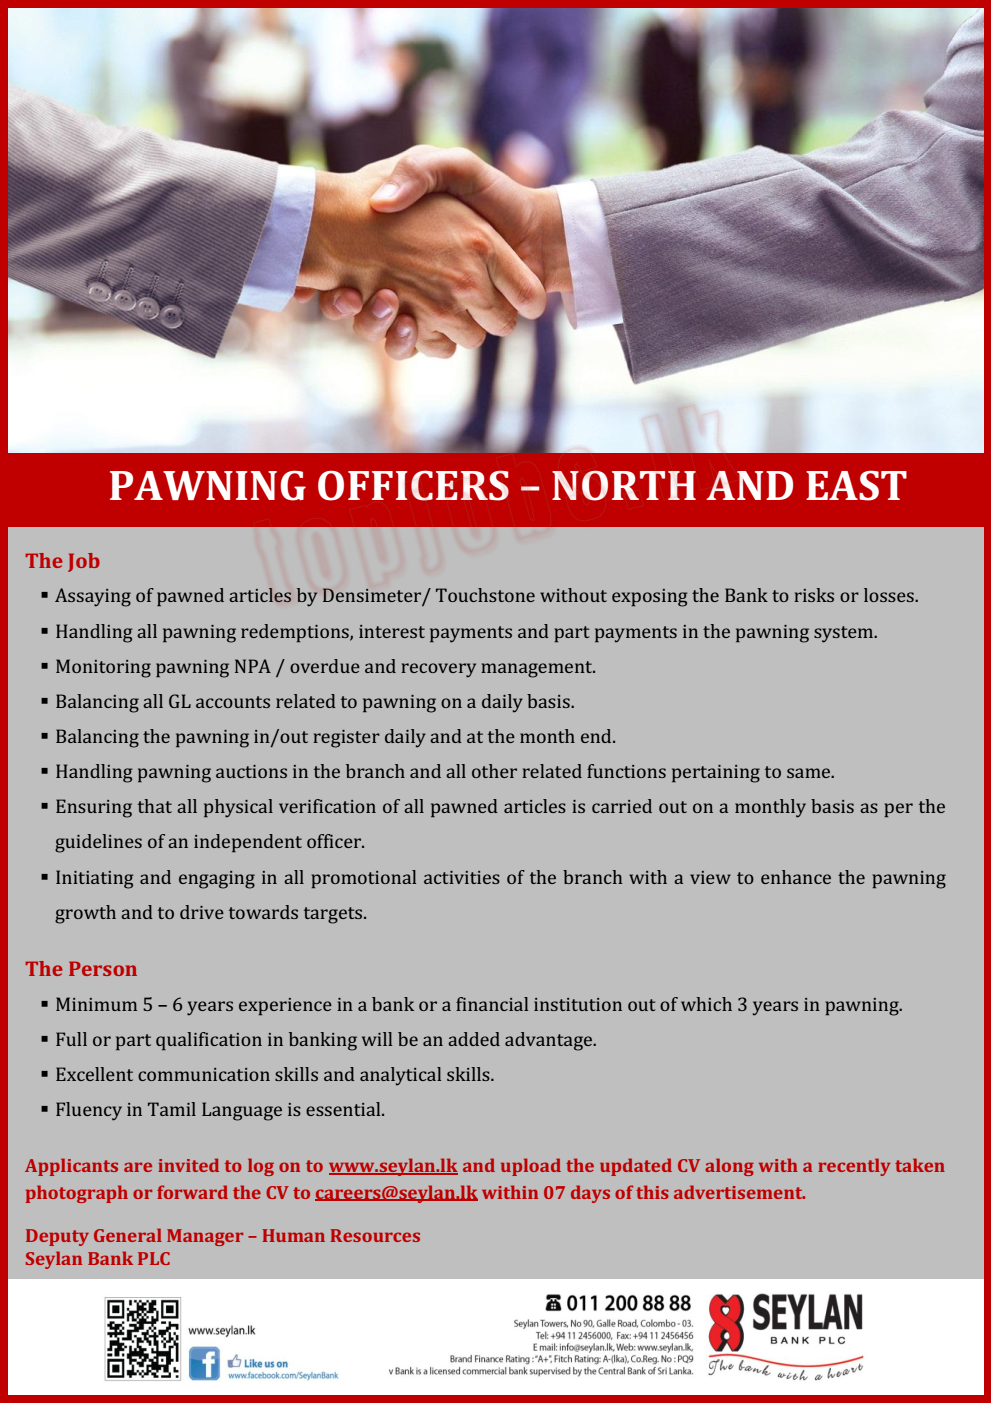 Pawning Officers - Seylan Bank PLC Job vacancies 2020